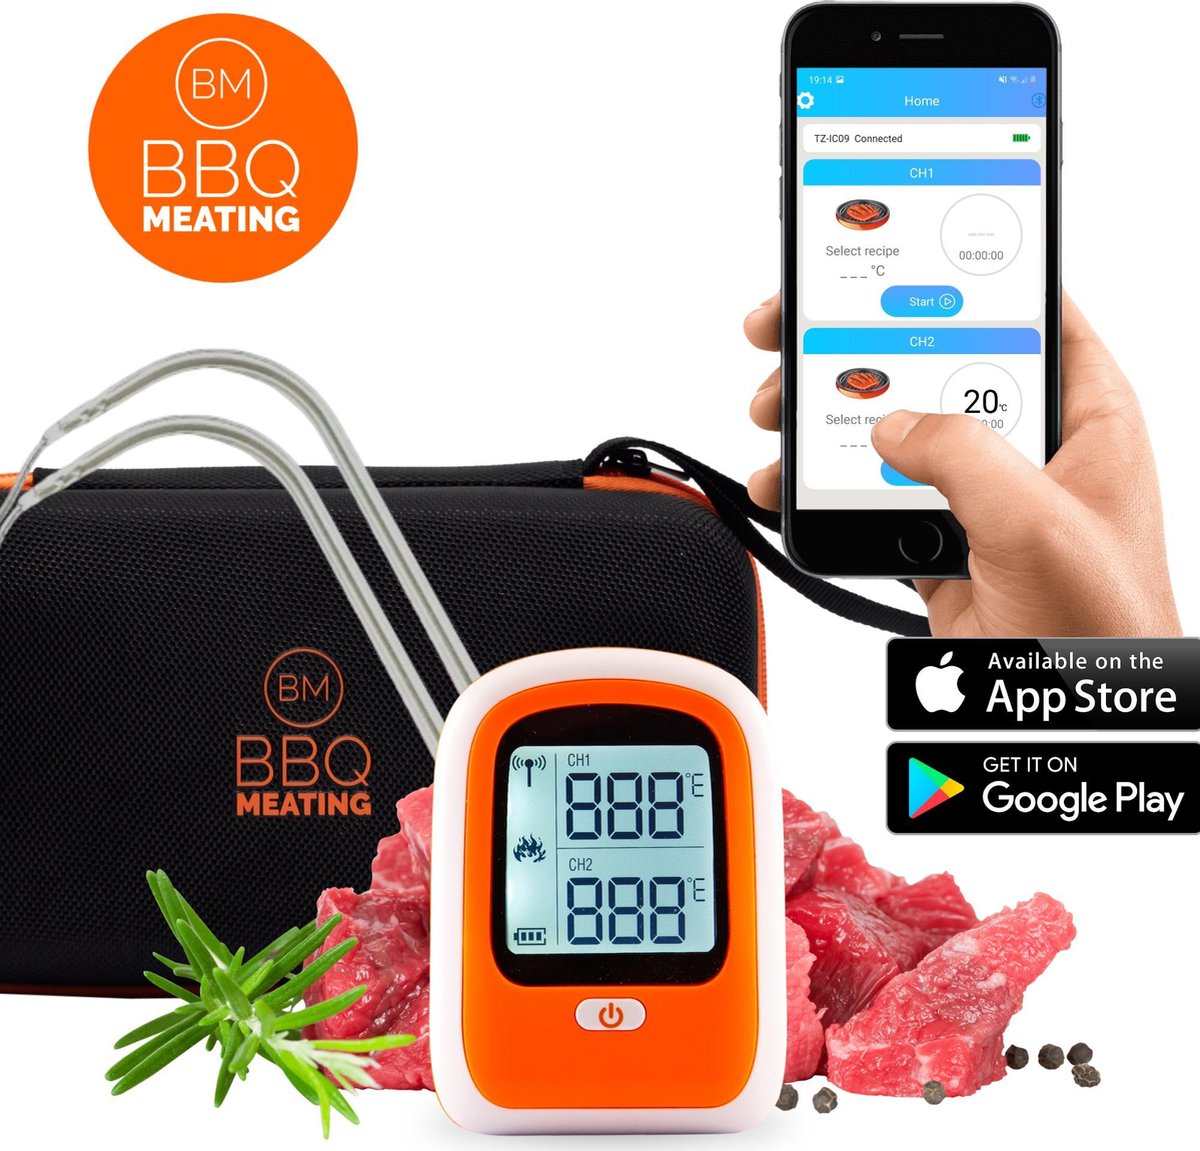 Bbq Meating Bbq Thermometer Digitaal met App en 2 Sondes - Beschermhoes - Magneet - Vleesthermometer